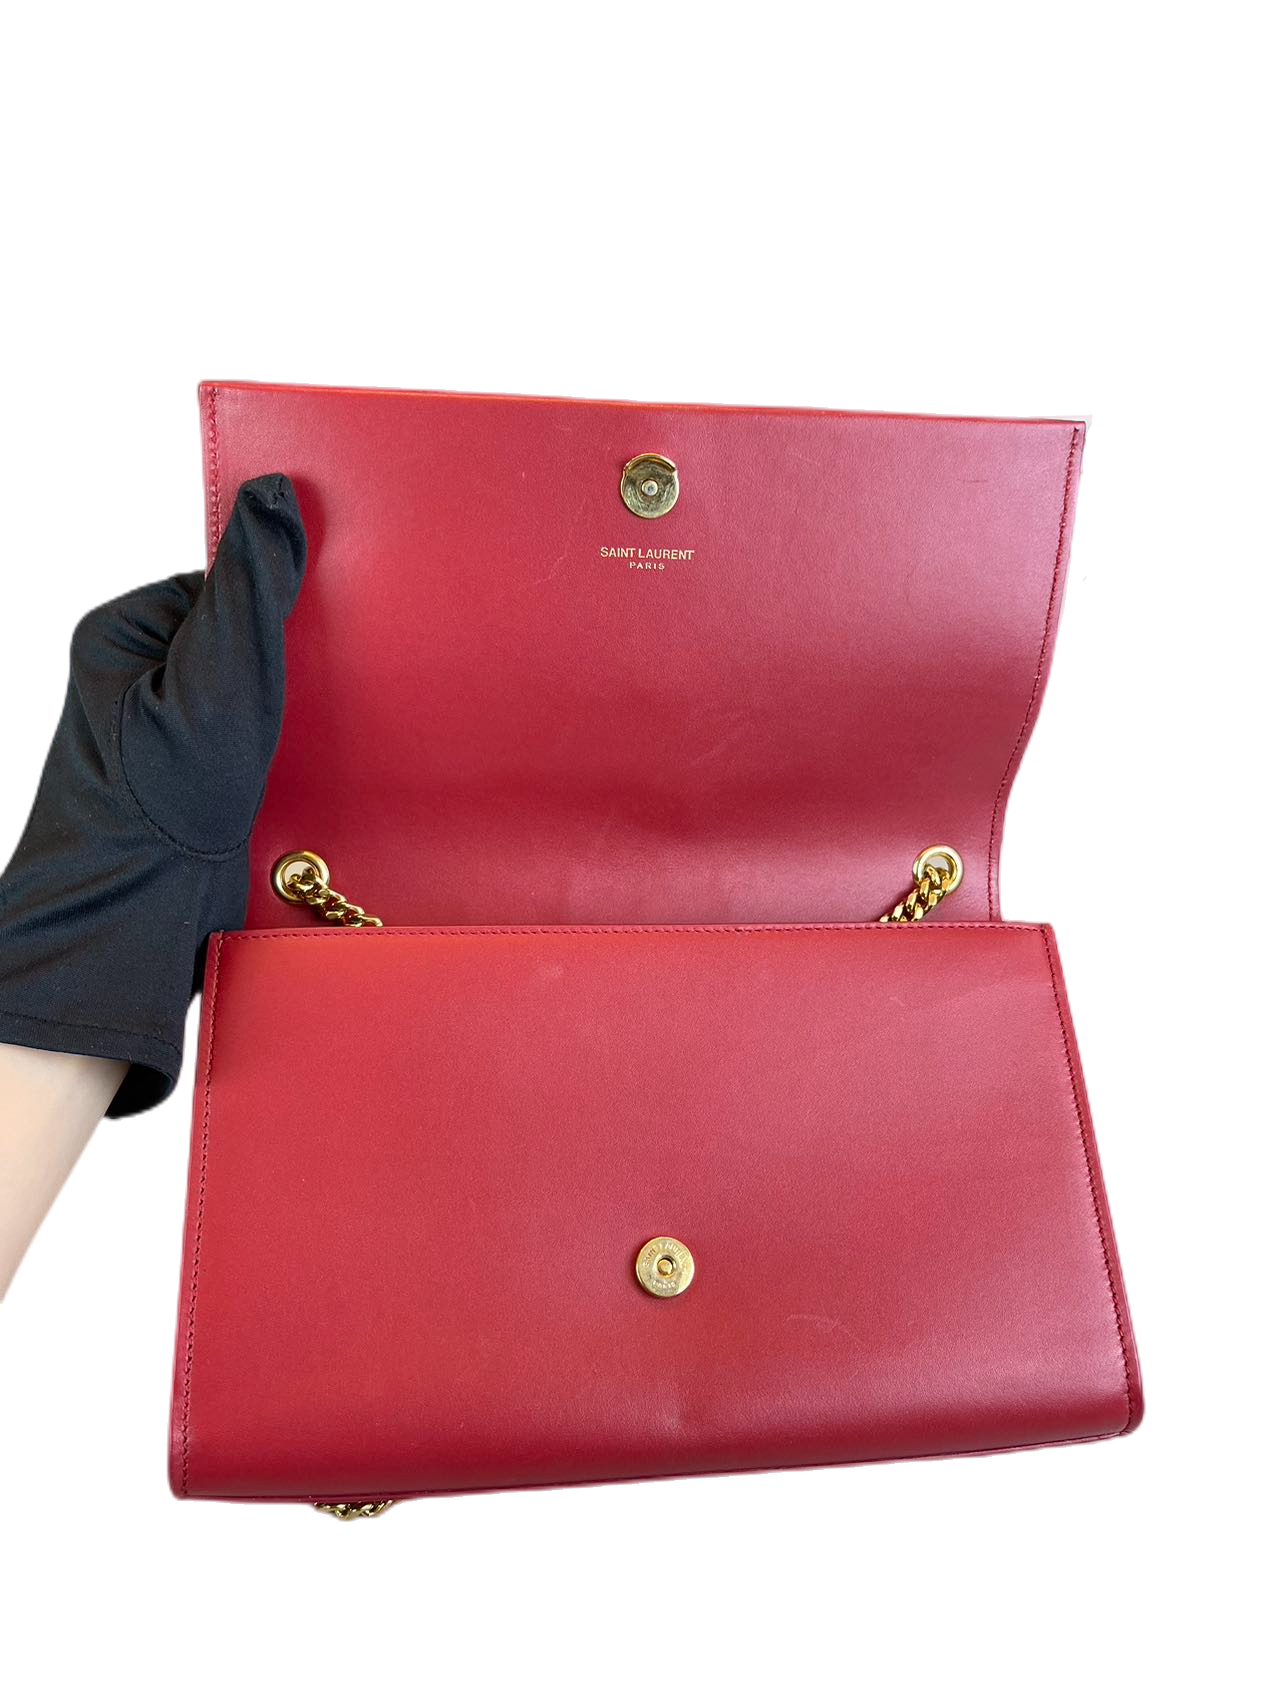 Yves Saint Laurent Red Leather Monogram Kate Chain Shoulder Bag